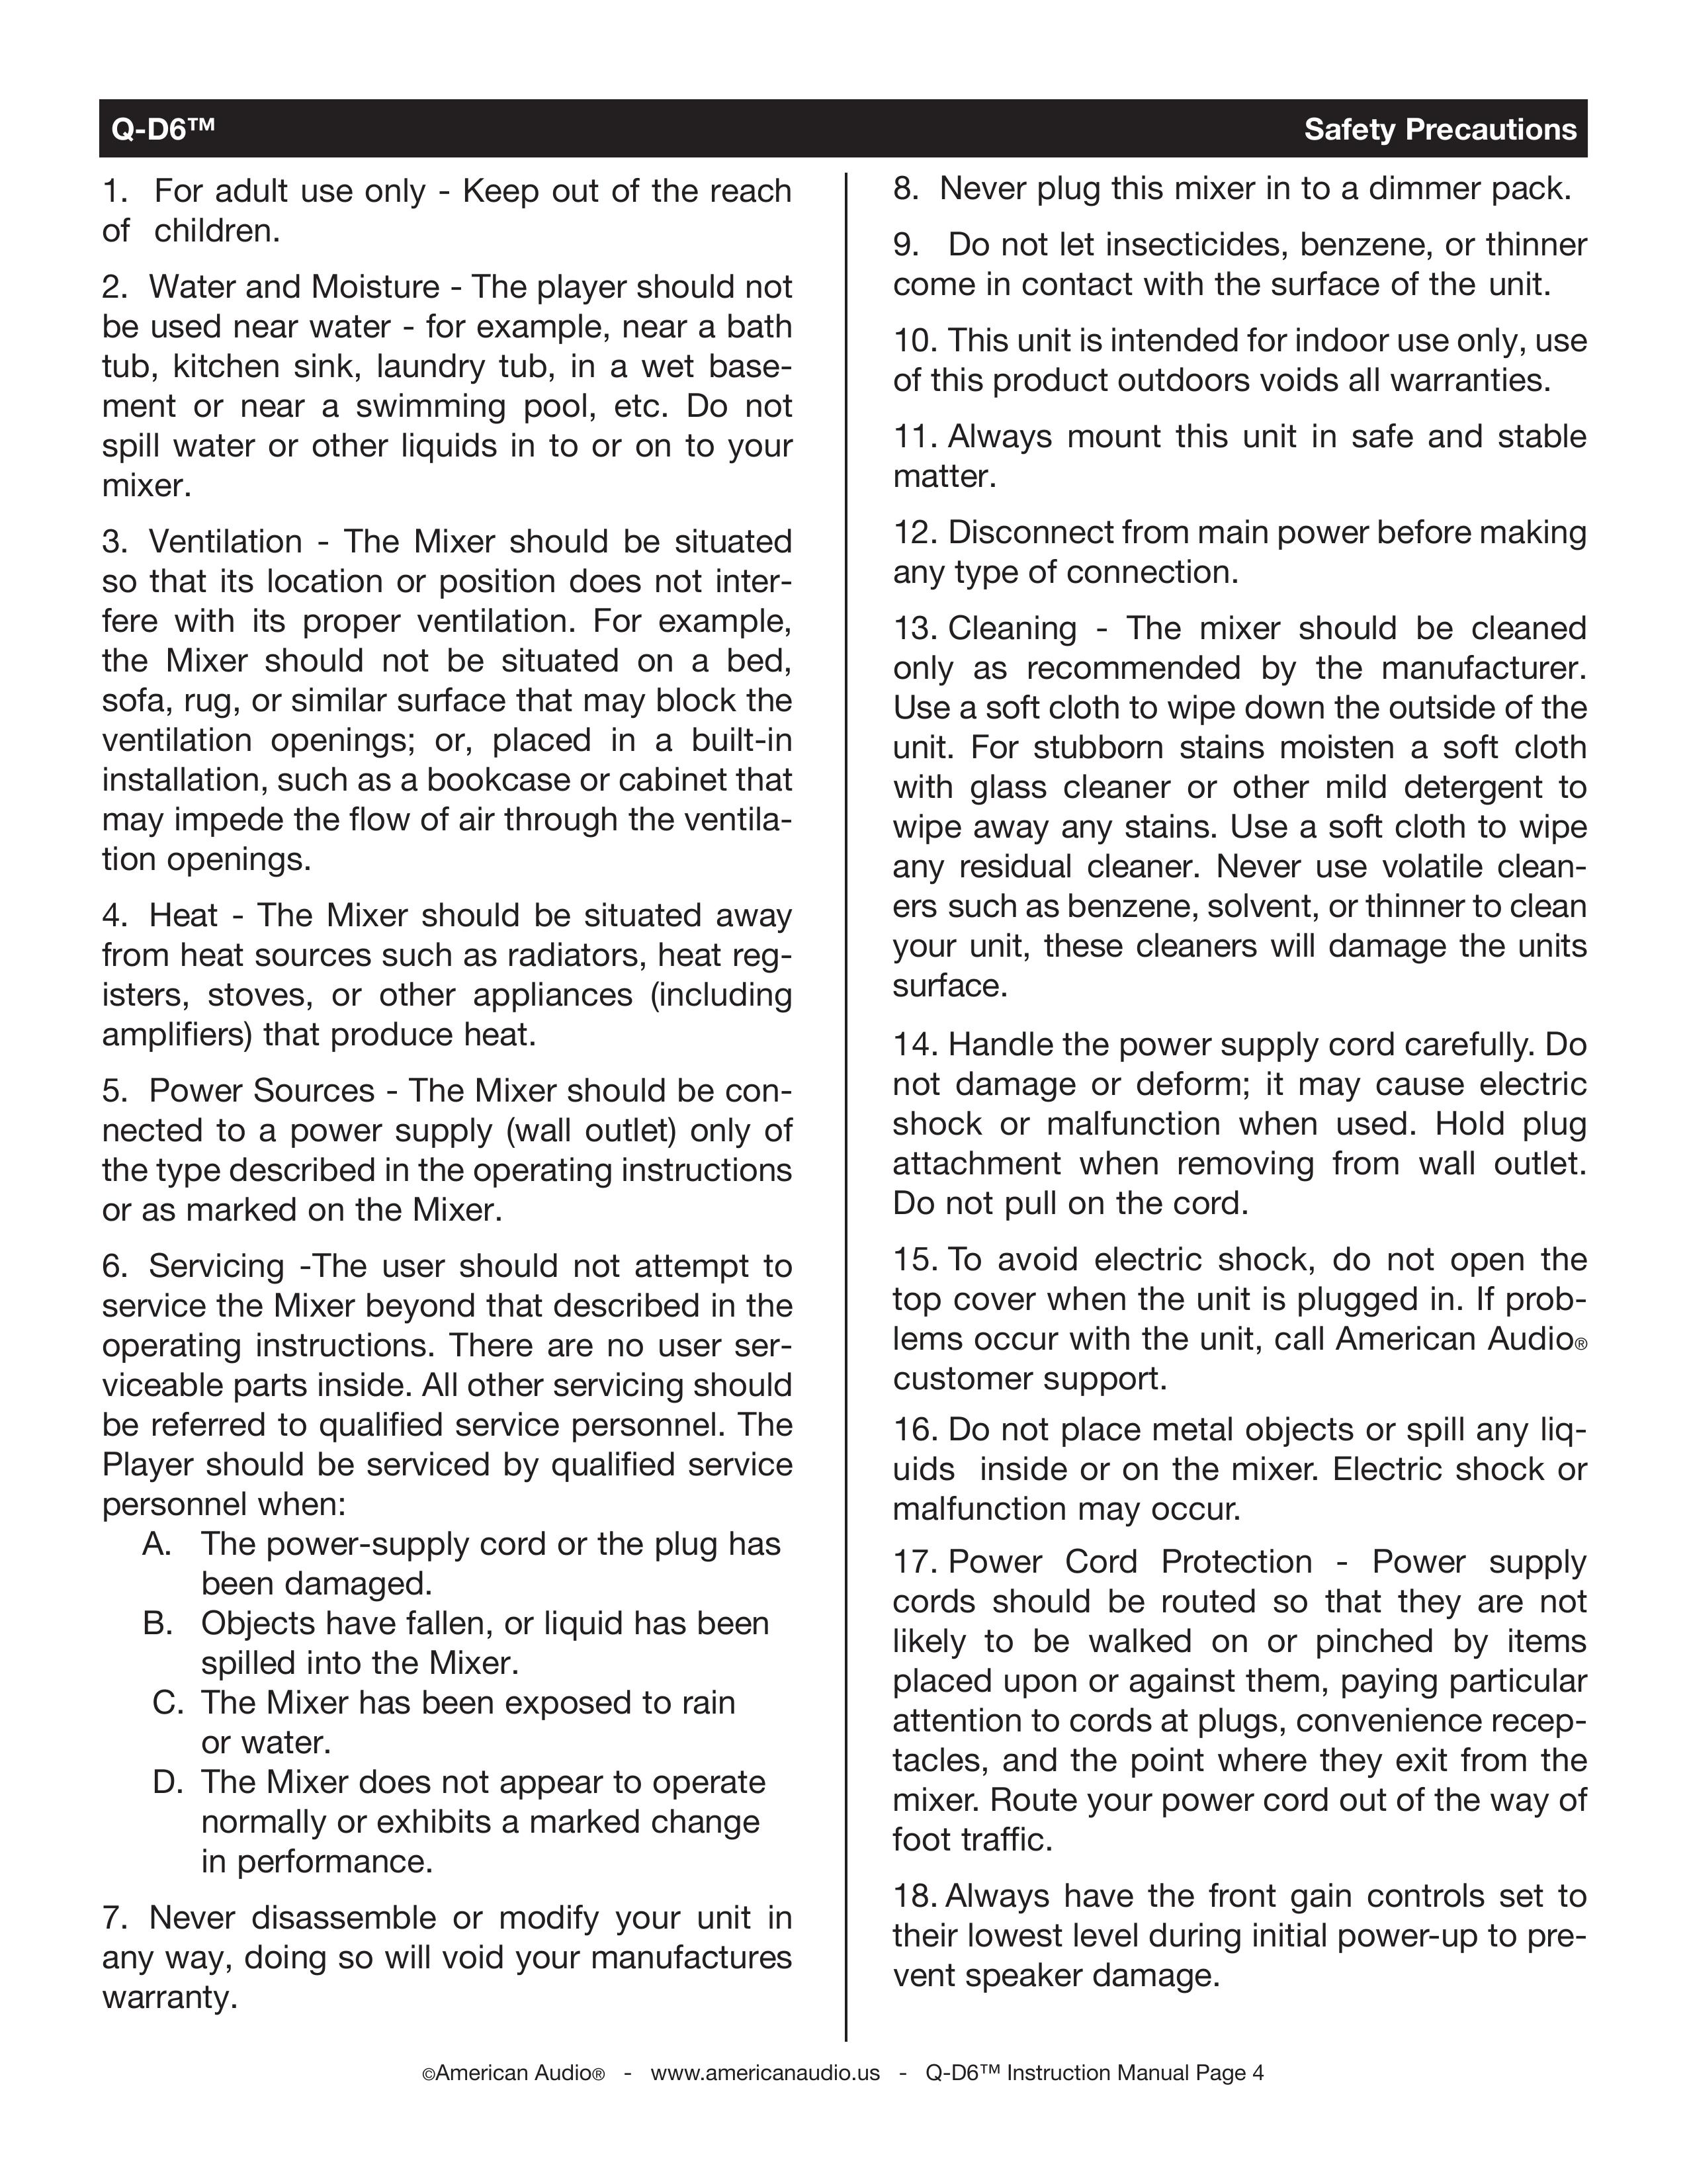 American Audio q-d6 DJ Equipment User Manual (Page 4)